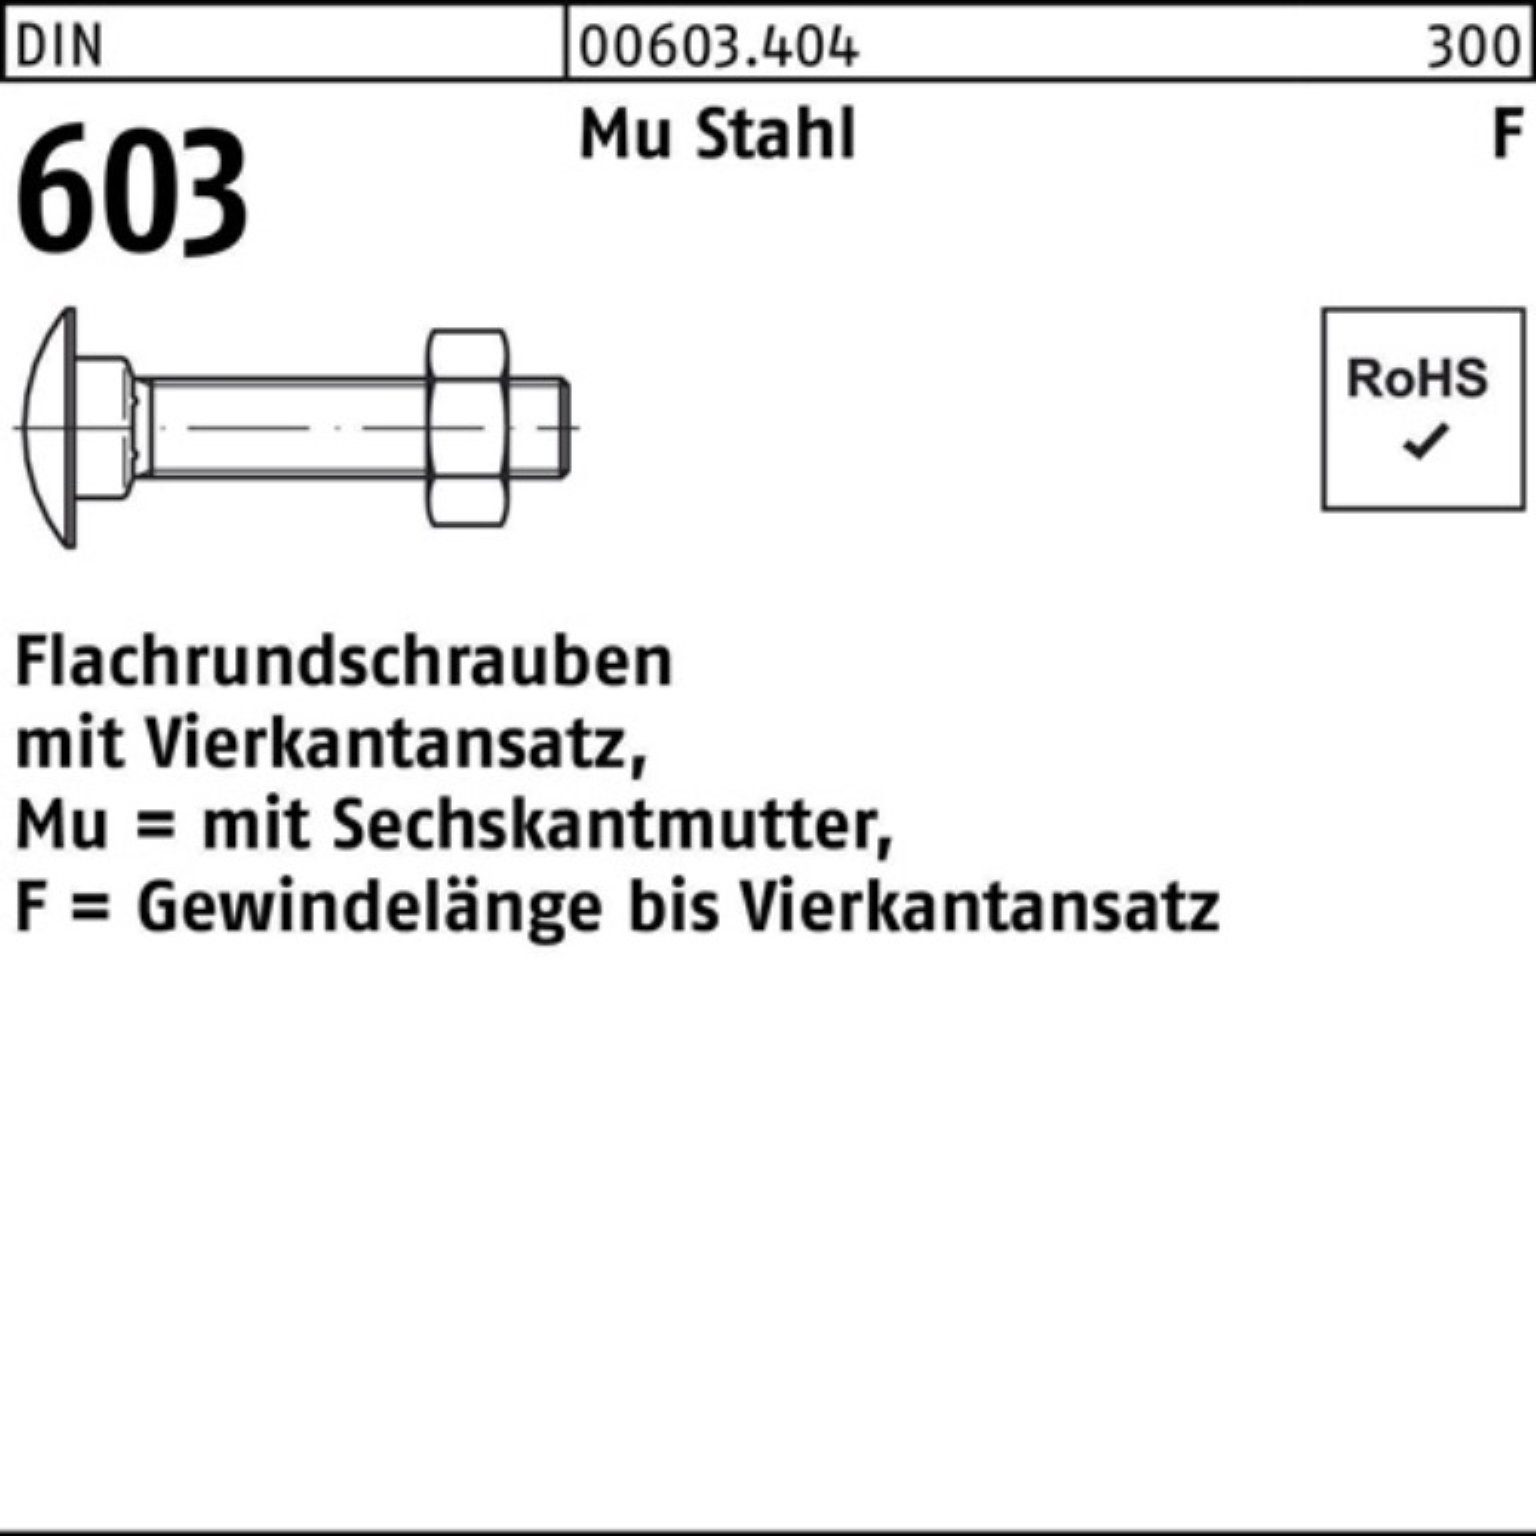 Pack Schraube M8x70 M Flachrundschraube 200er DIN Vierkantansatz/6-ktmutter Reyher 603